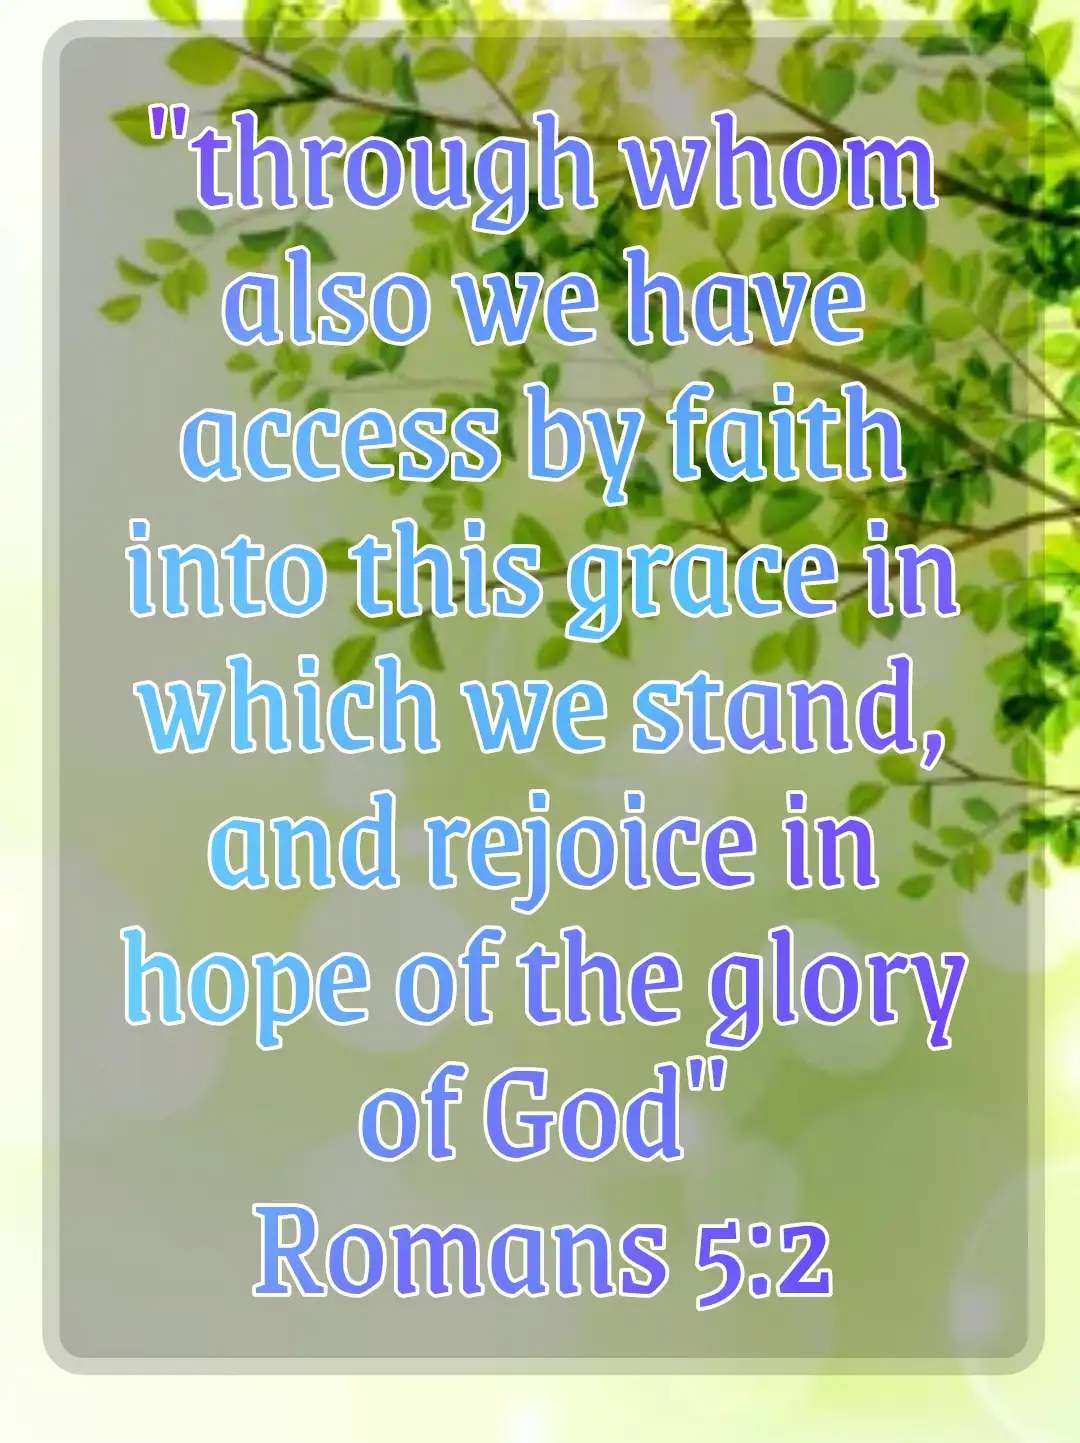 bible verses on faith and hope (Romans 5:2) (2)